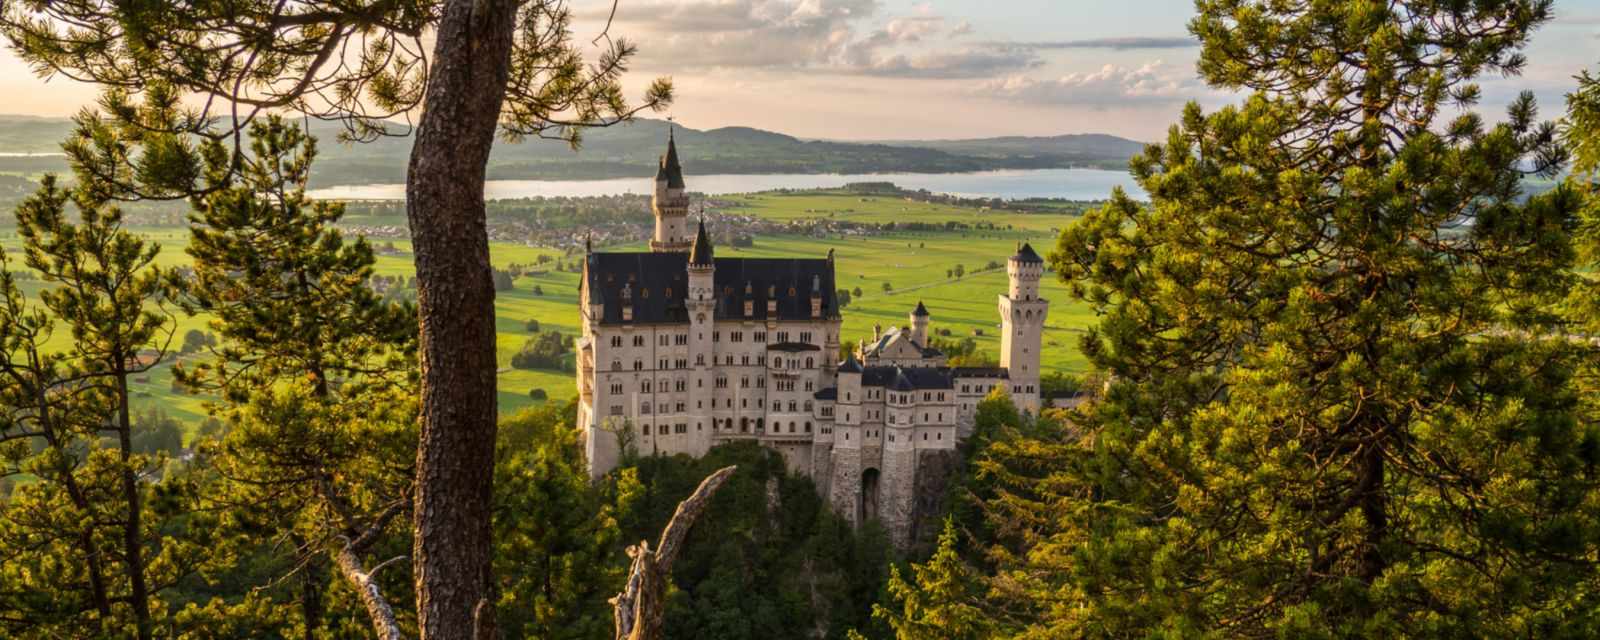 Neuschwanstein Castle Season Guide and 3 Best Viewpoints